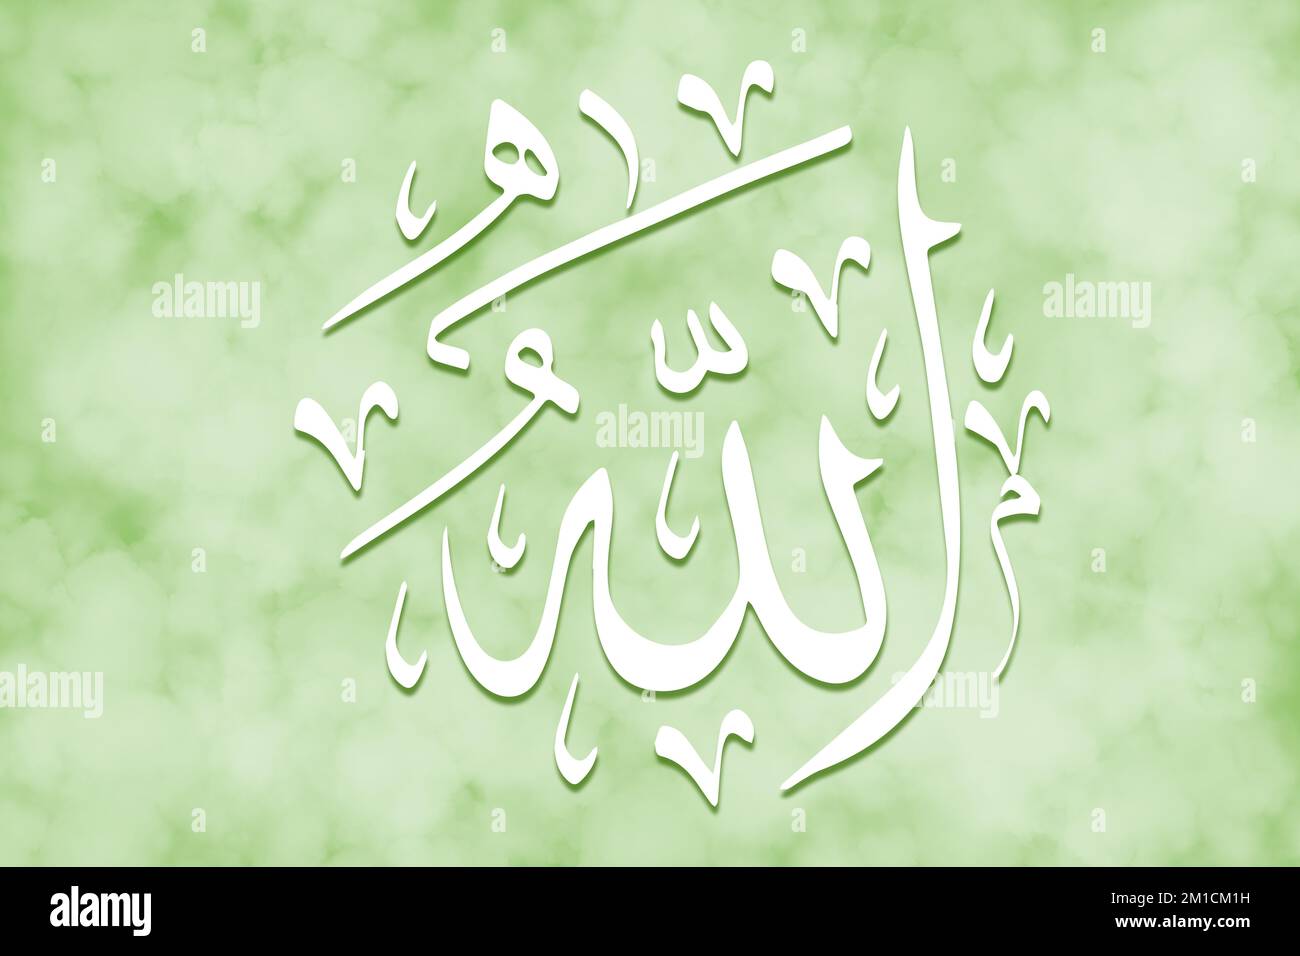 Allah - 99 Names of Allah, Al-Asma al-Husna arabic islamic calligraphy art on canvas for water art and decor. Stock Photo